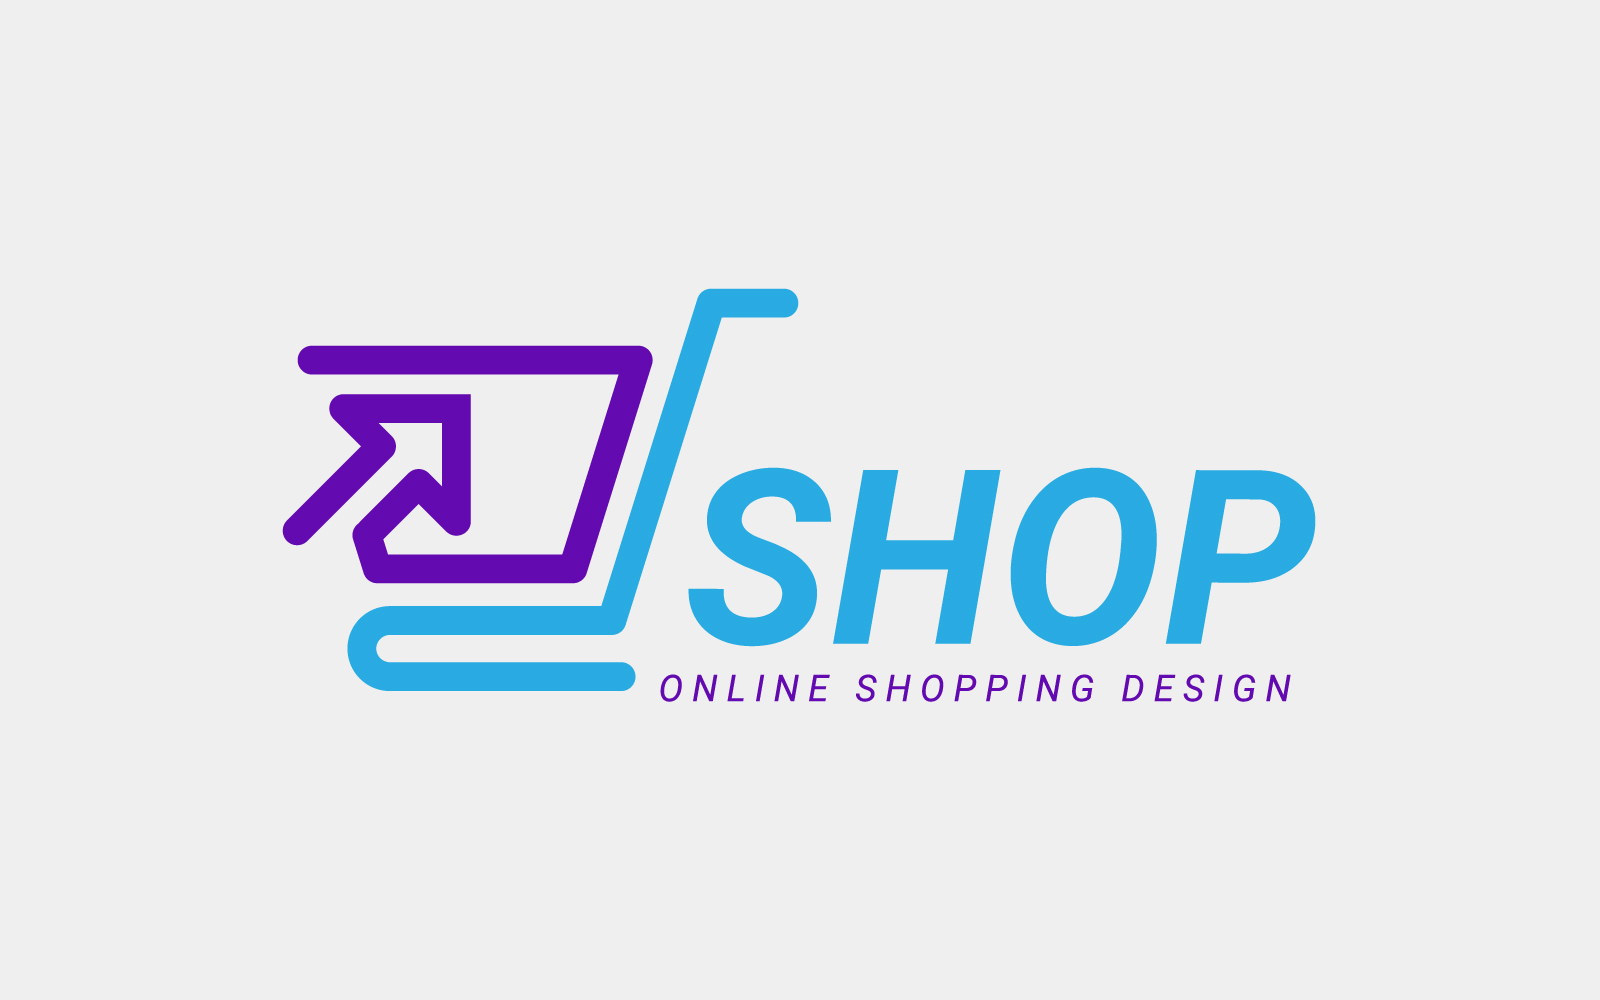 Logo Design For E-Commerce Website Or E-Business Concept For Mouse Cursor And Shopping Cart